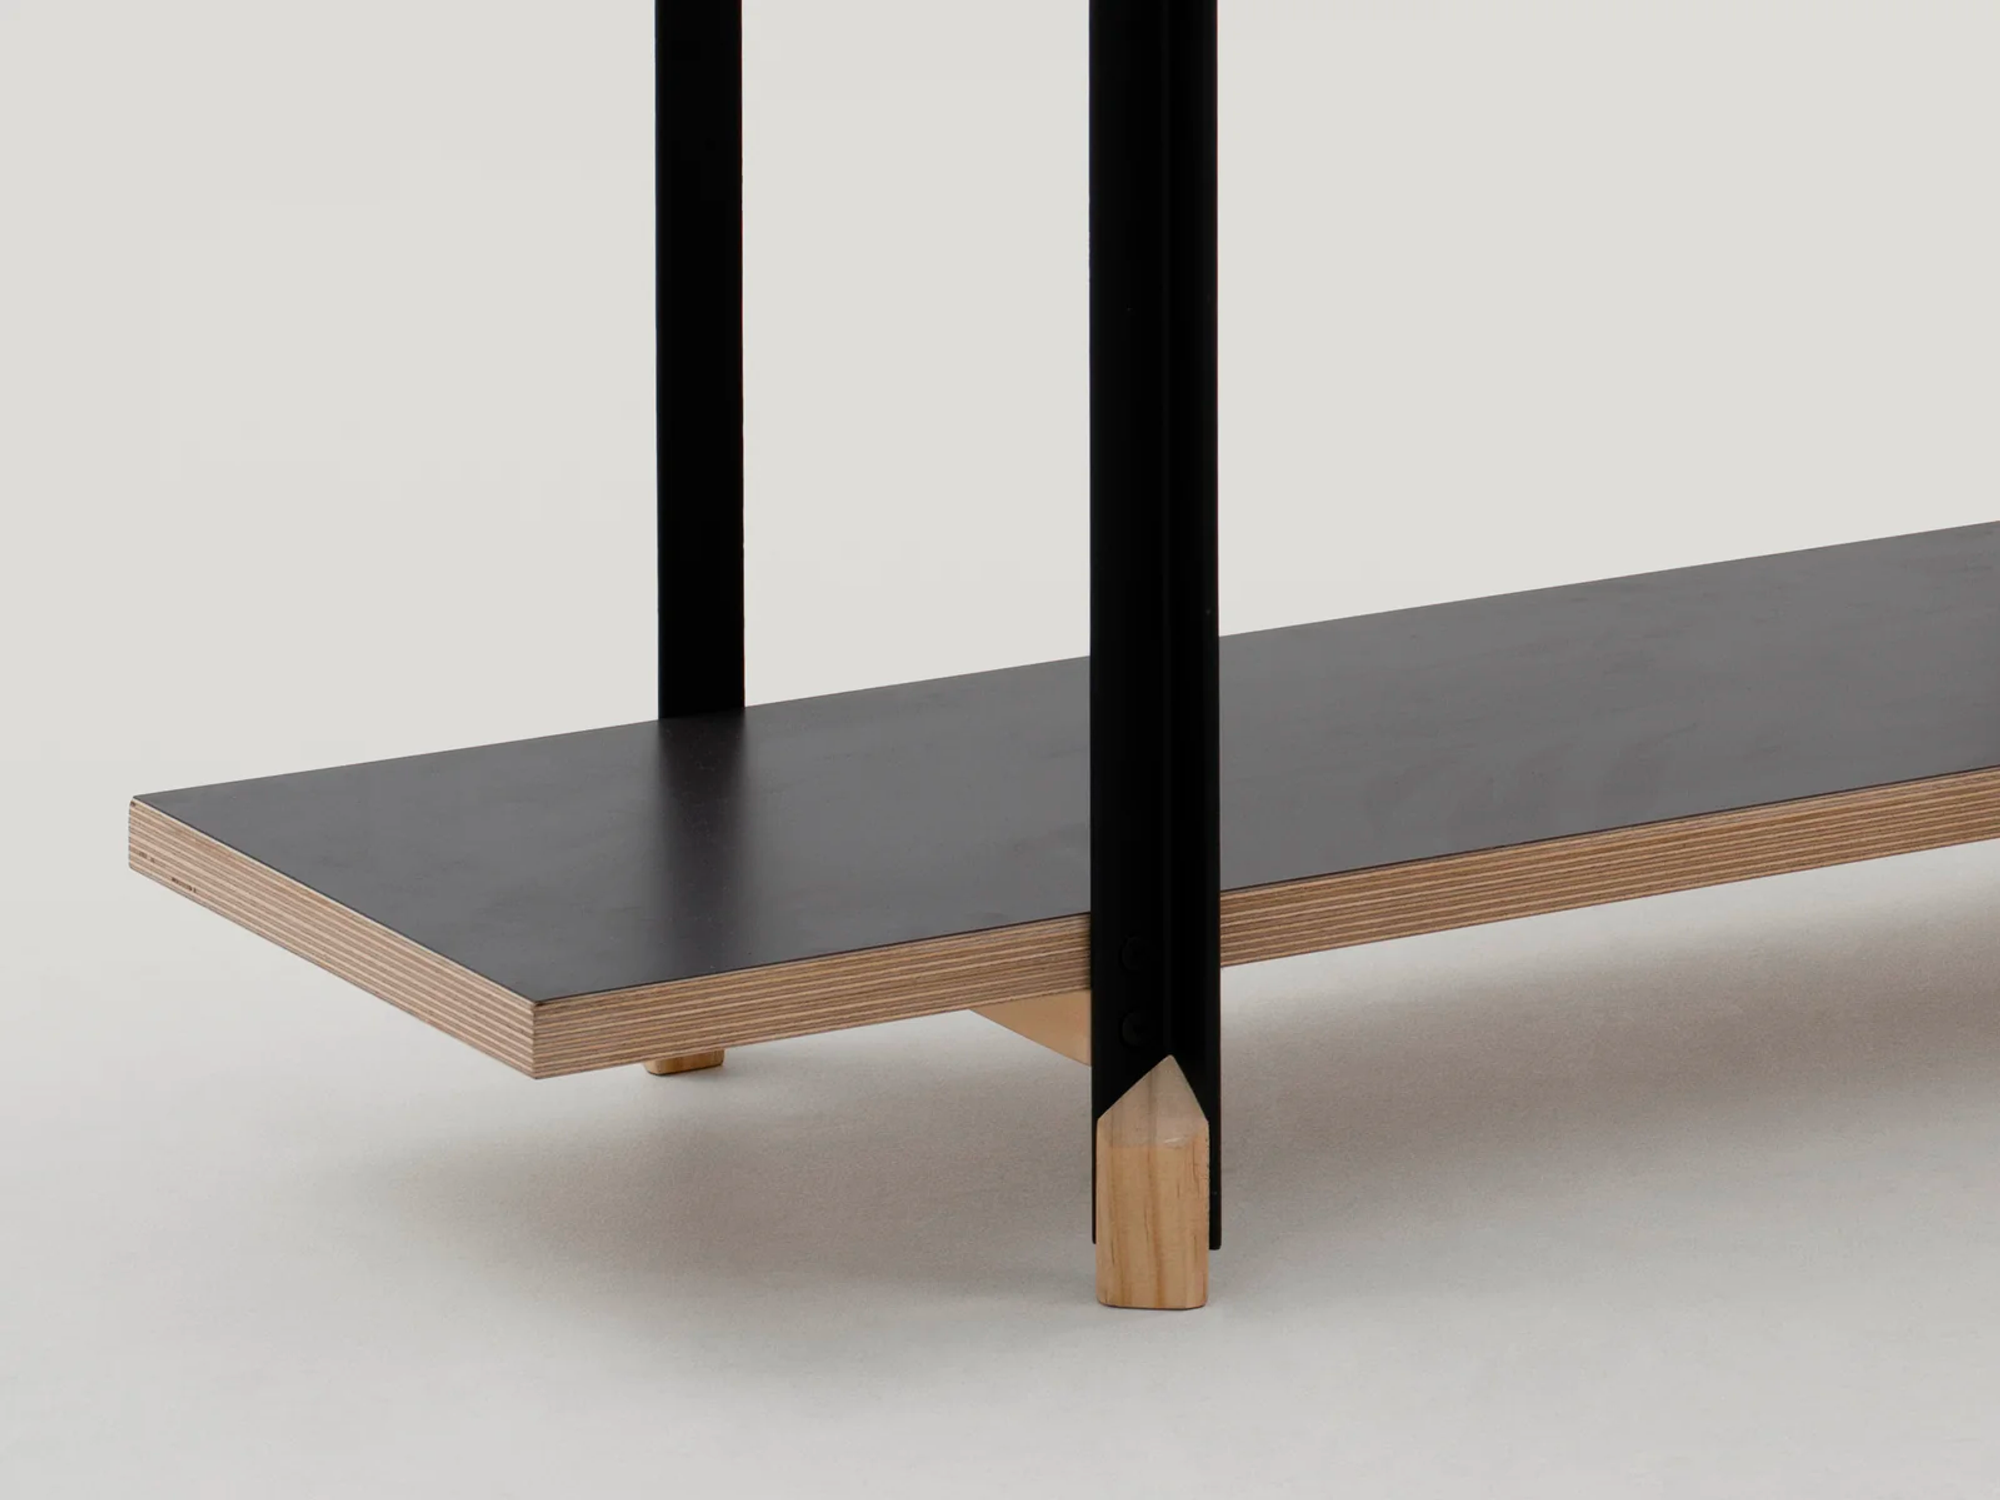 KOBO ST-Shelf by Ishinomaki Furniture Laboratory